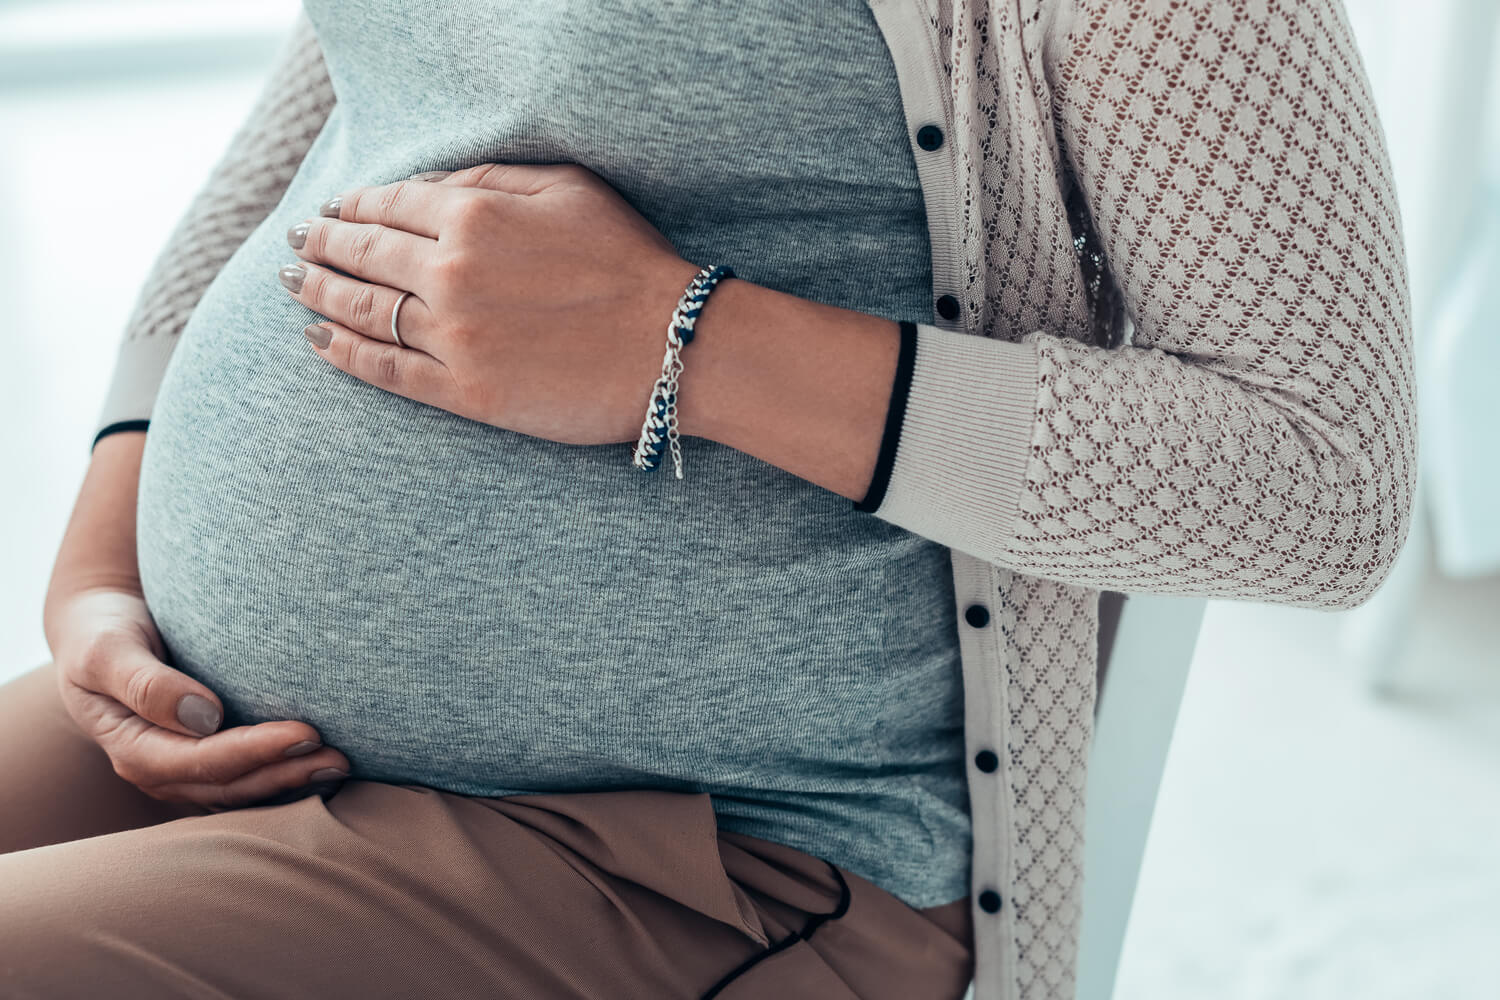 Warning Signs Of Decrease In Fetal Movements